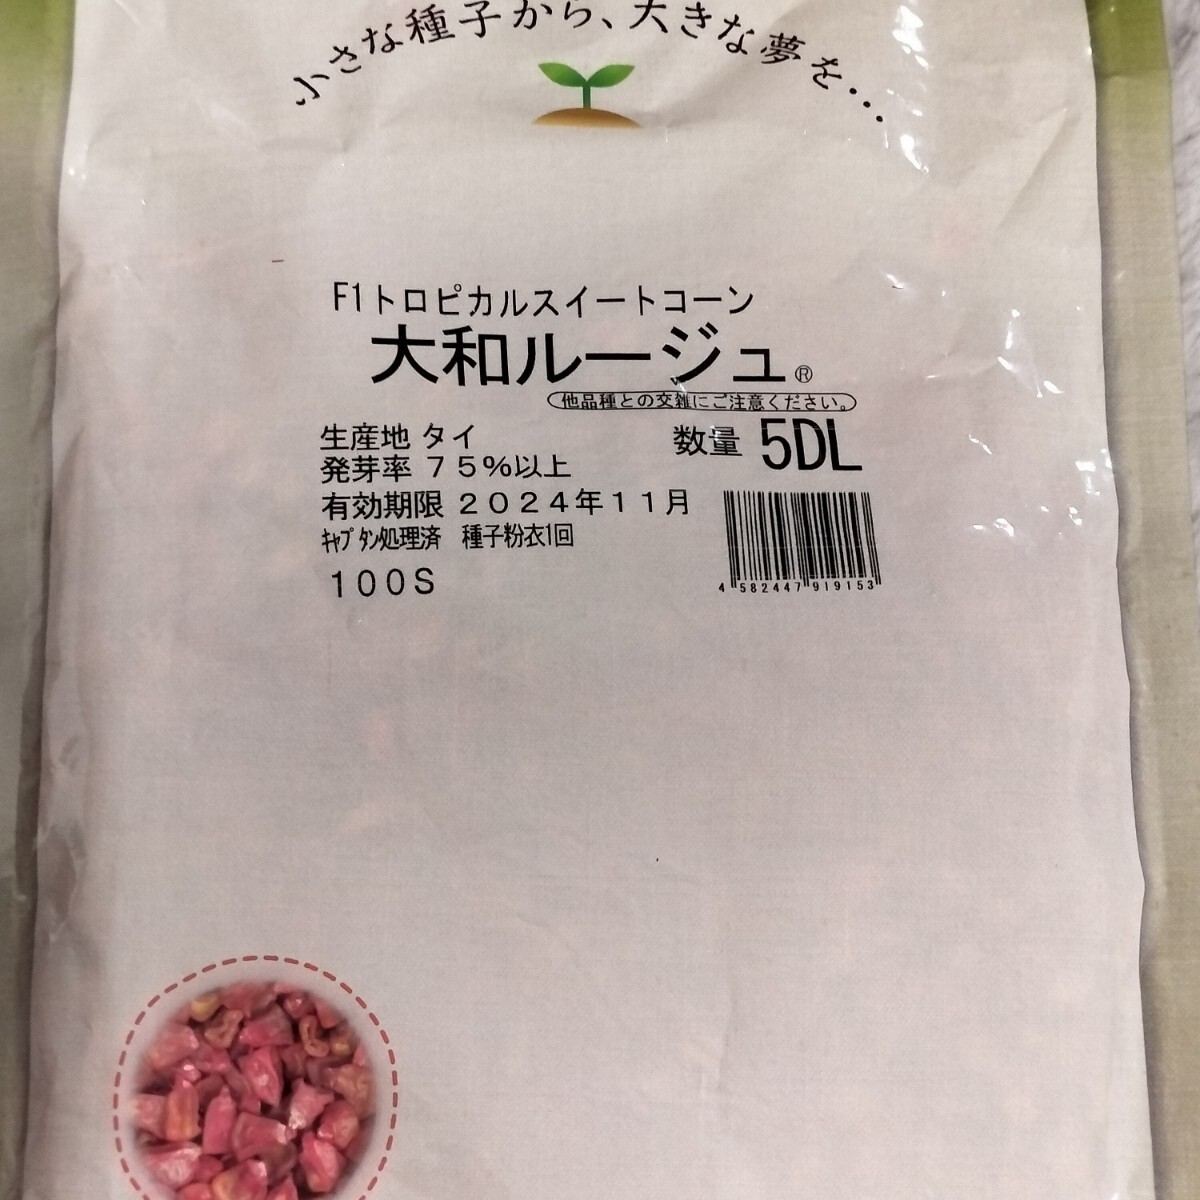 [150 шарик ] Yamato rouge тропический сладкий кукуруза кукуруза красный вид ..